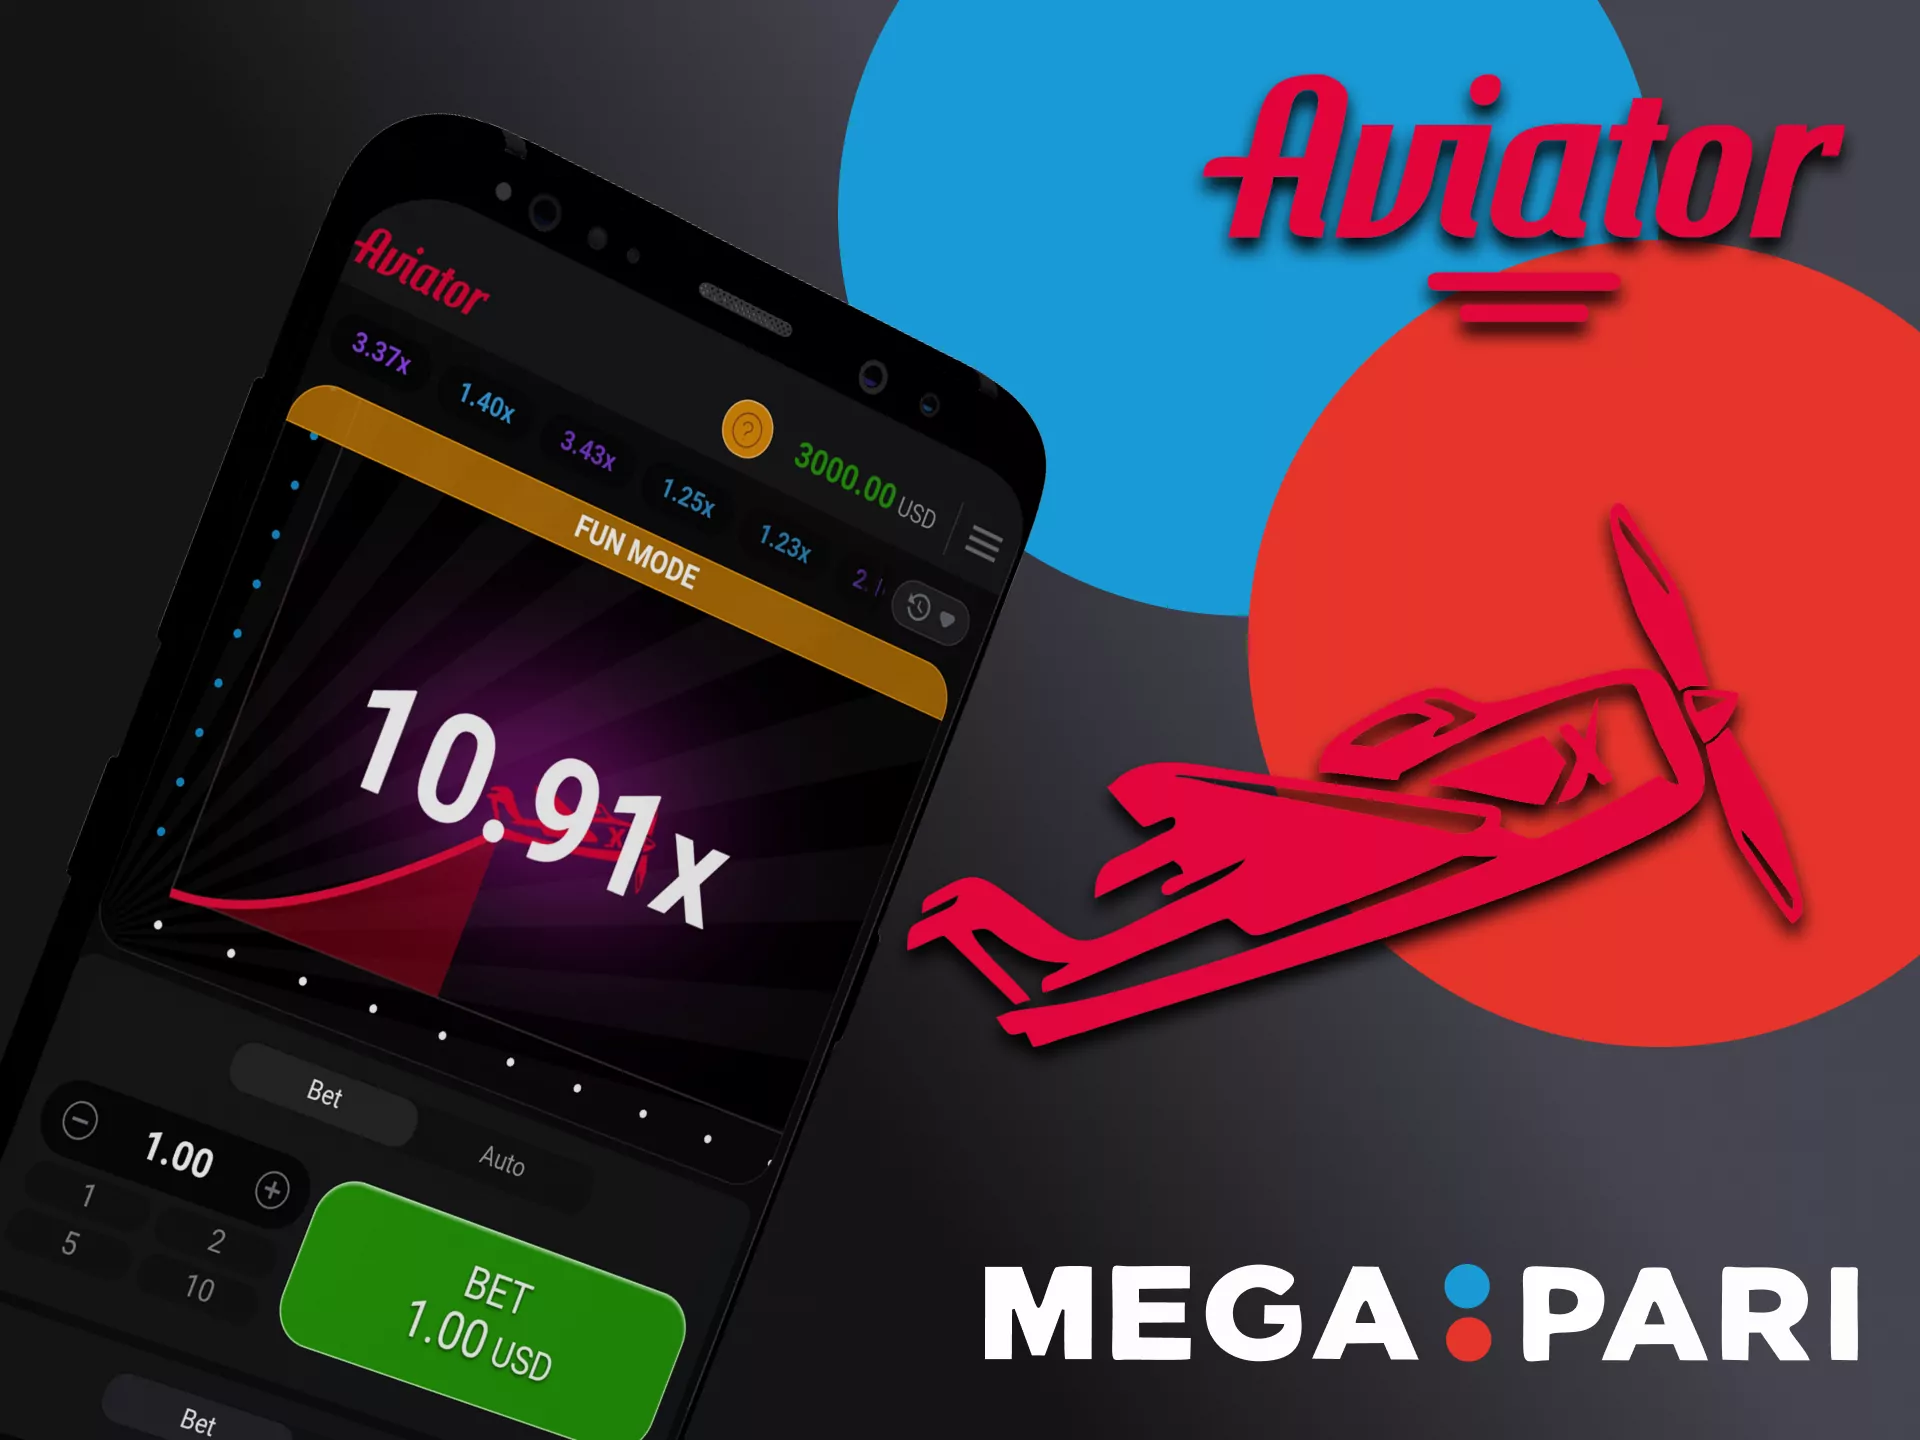 Play Avaitor through the Megapari app on Android.